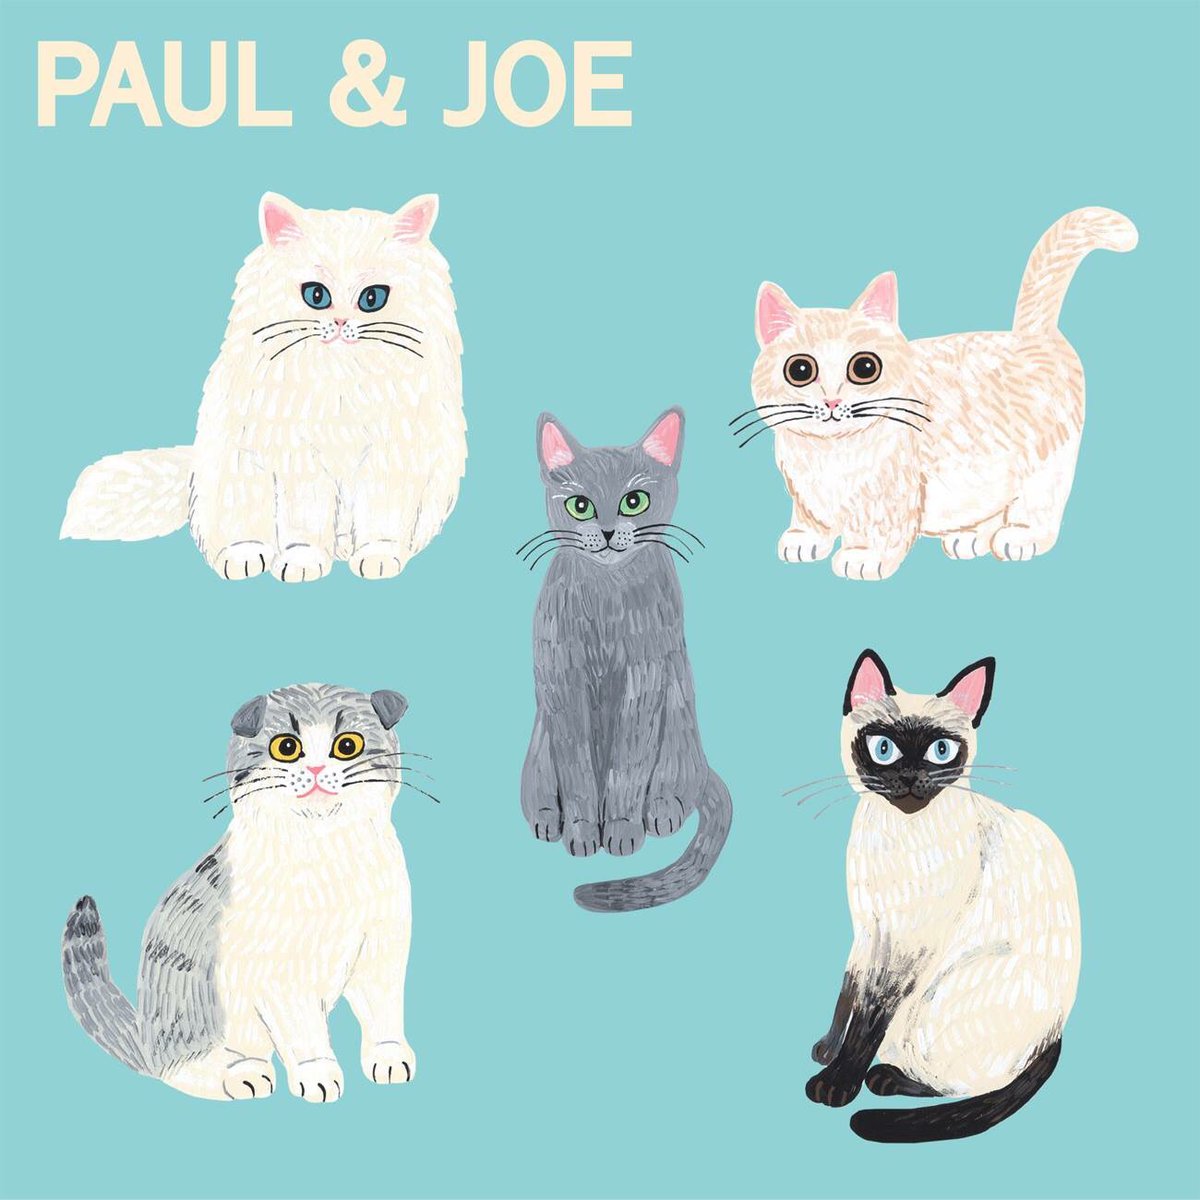 Paul Joe Beaute Jp 友達と一緒にやってみて Paul Joe 猫診断 質問に答えてあなたの 猫 タイプを診断します 人気の プライマー のサンプルの プレゼント も T Co Viob5ggdhf ポールアンドジョー ポールアンドジョー猫診断